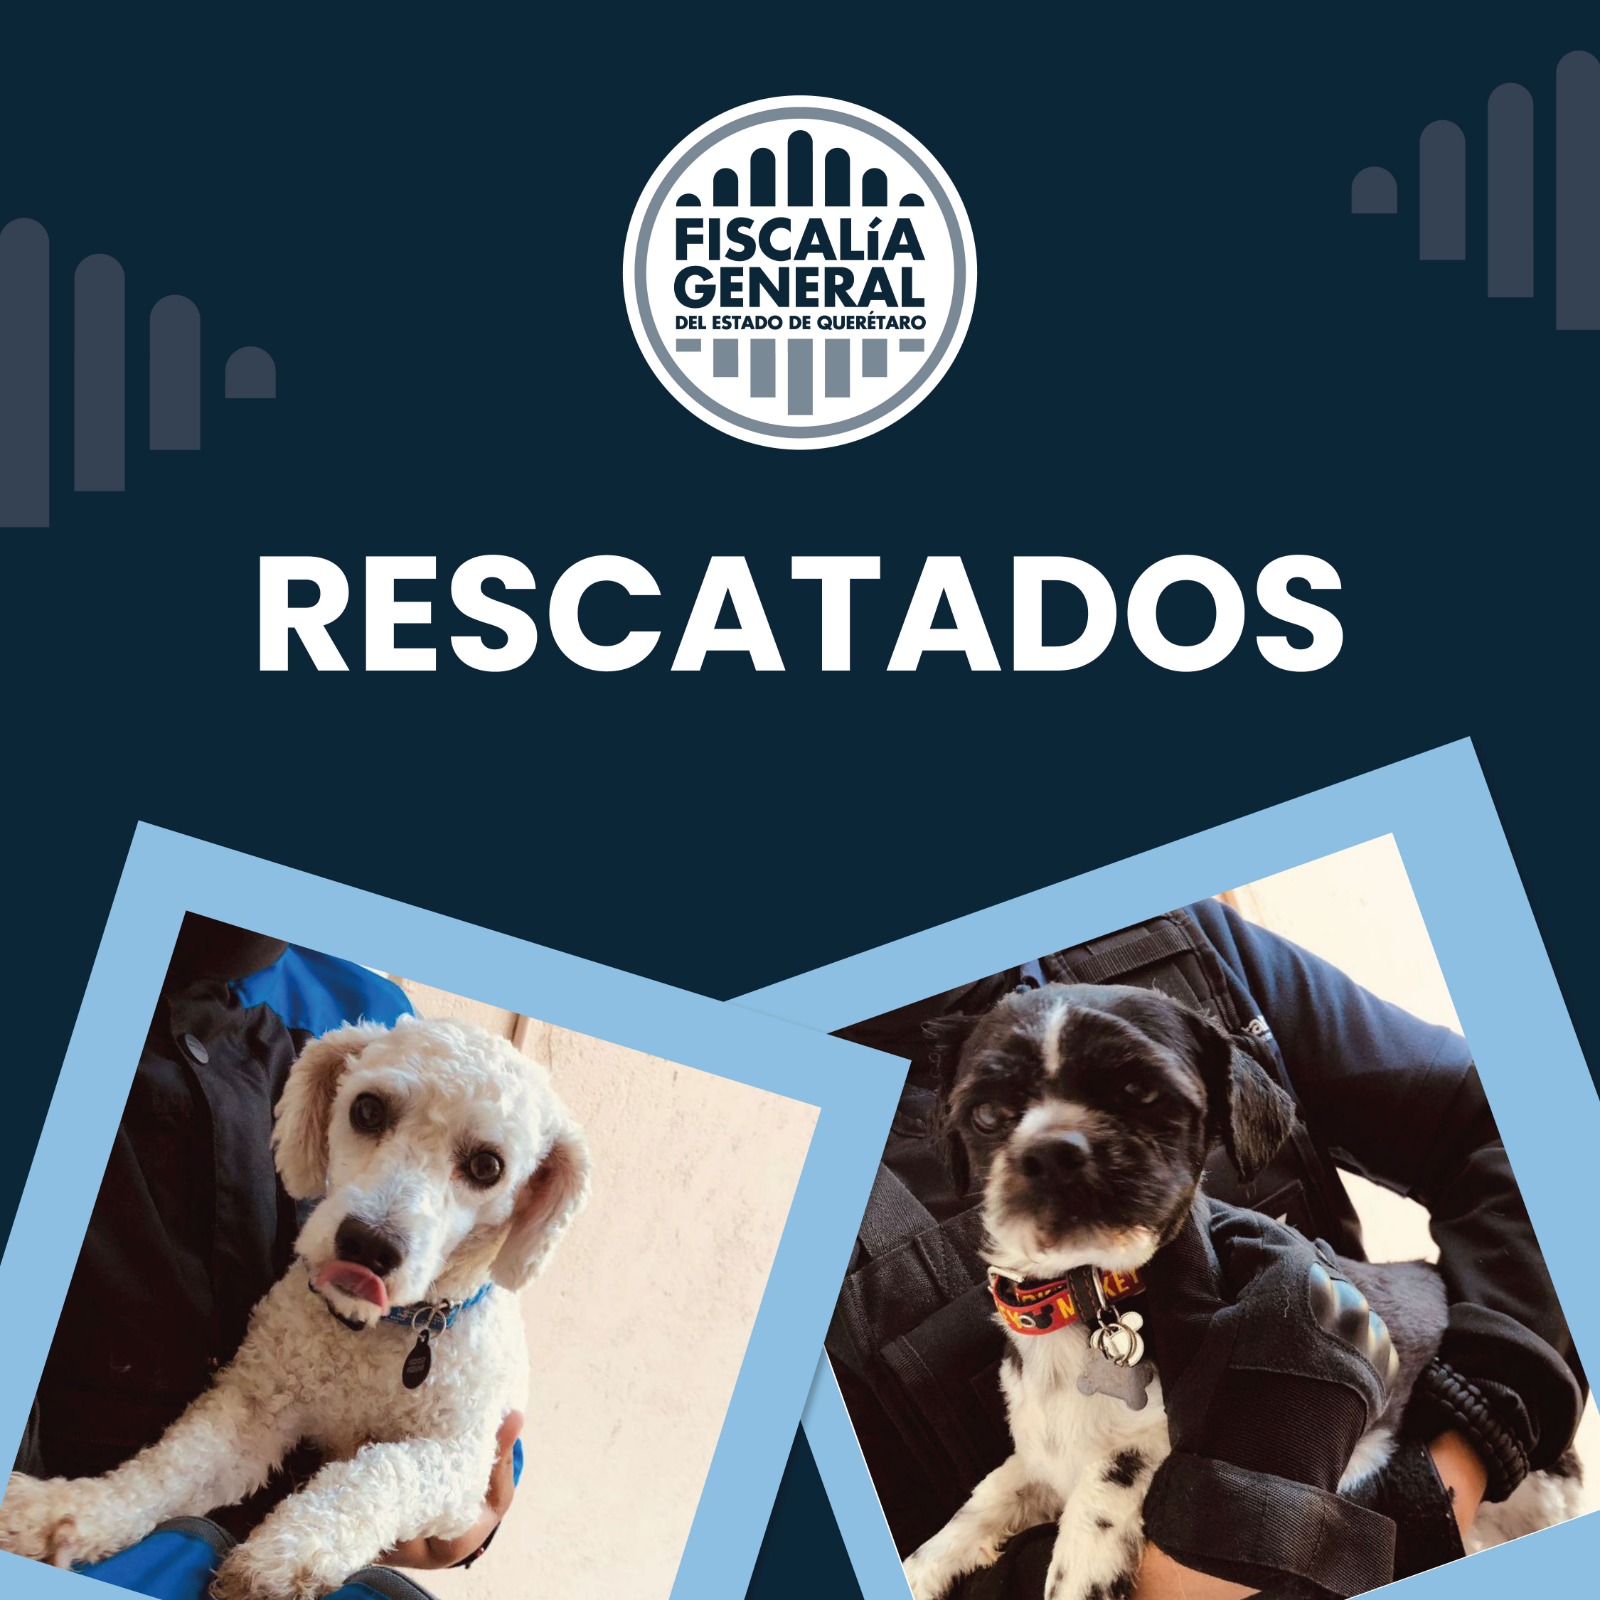 Fiscalía y Protección Animal de Querétaro rescatan a dos caninos